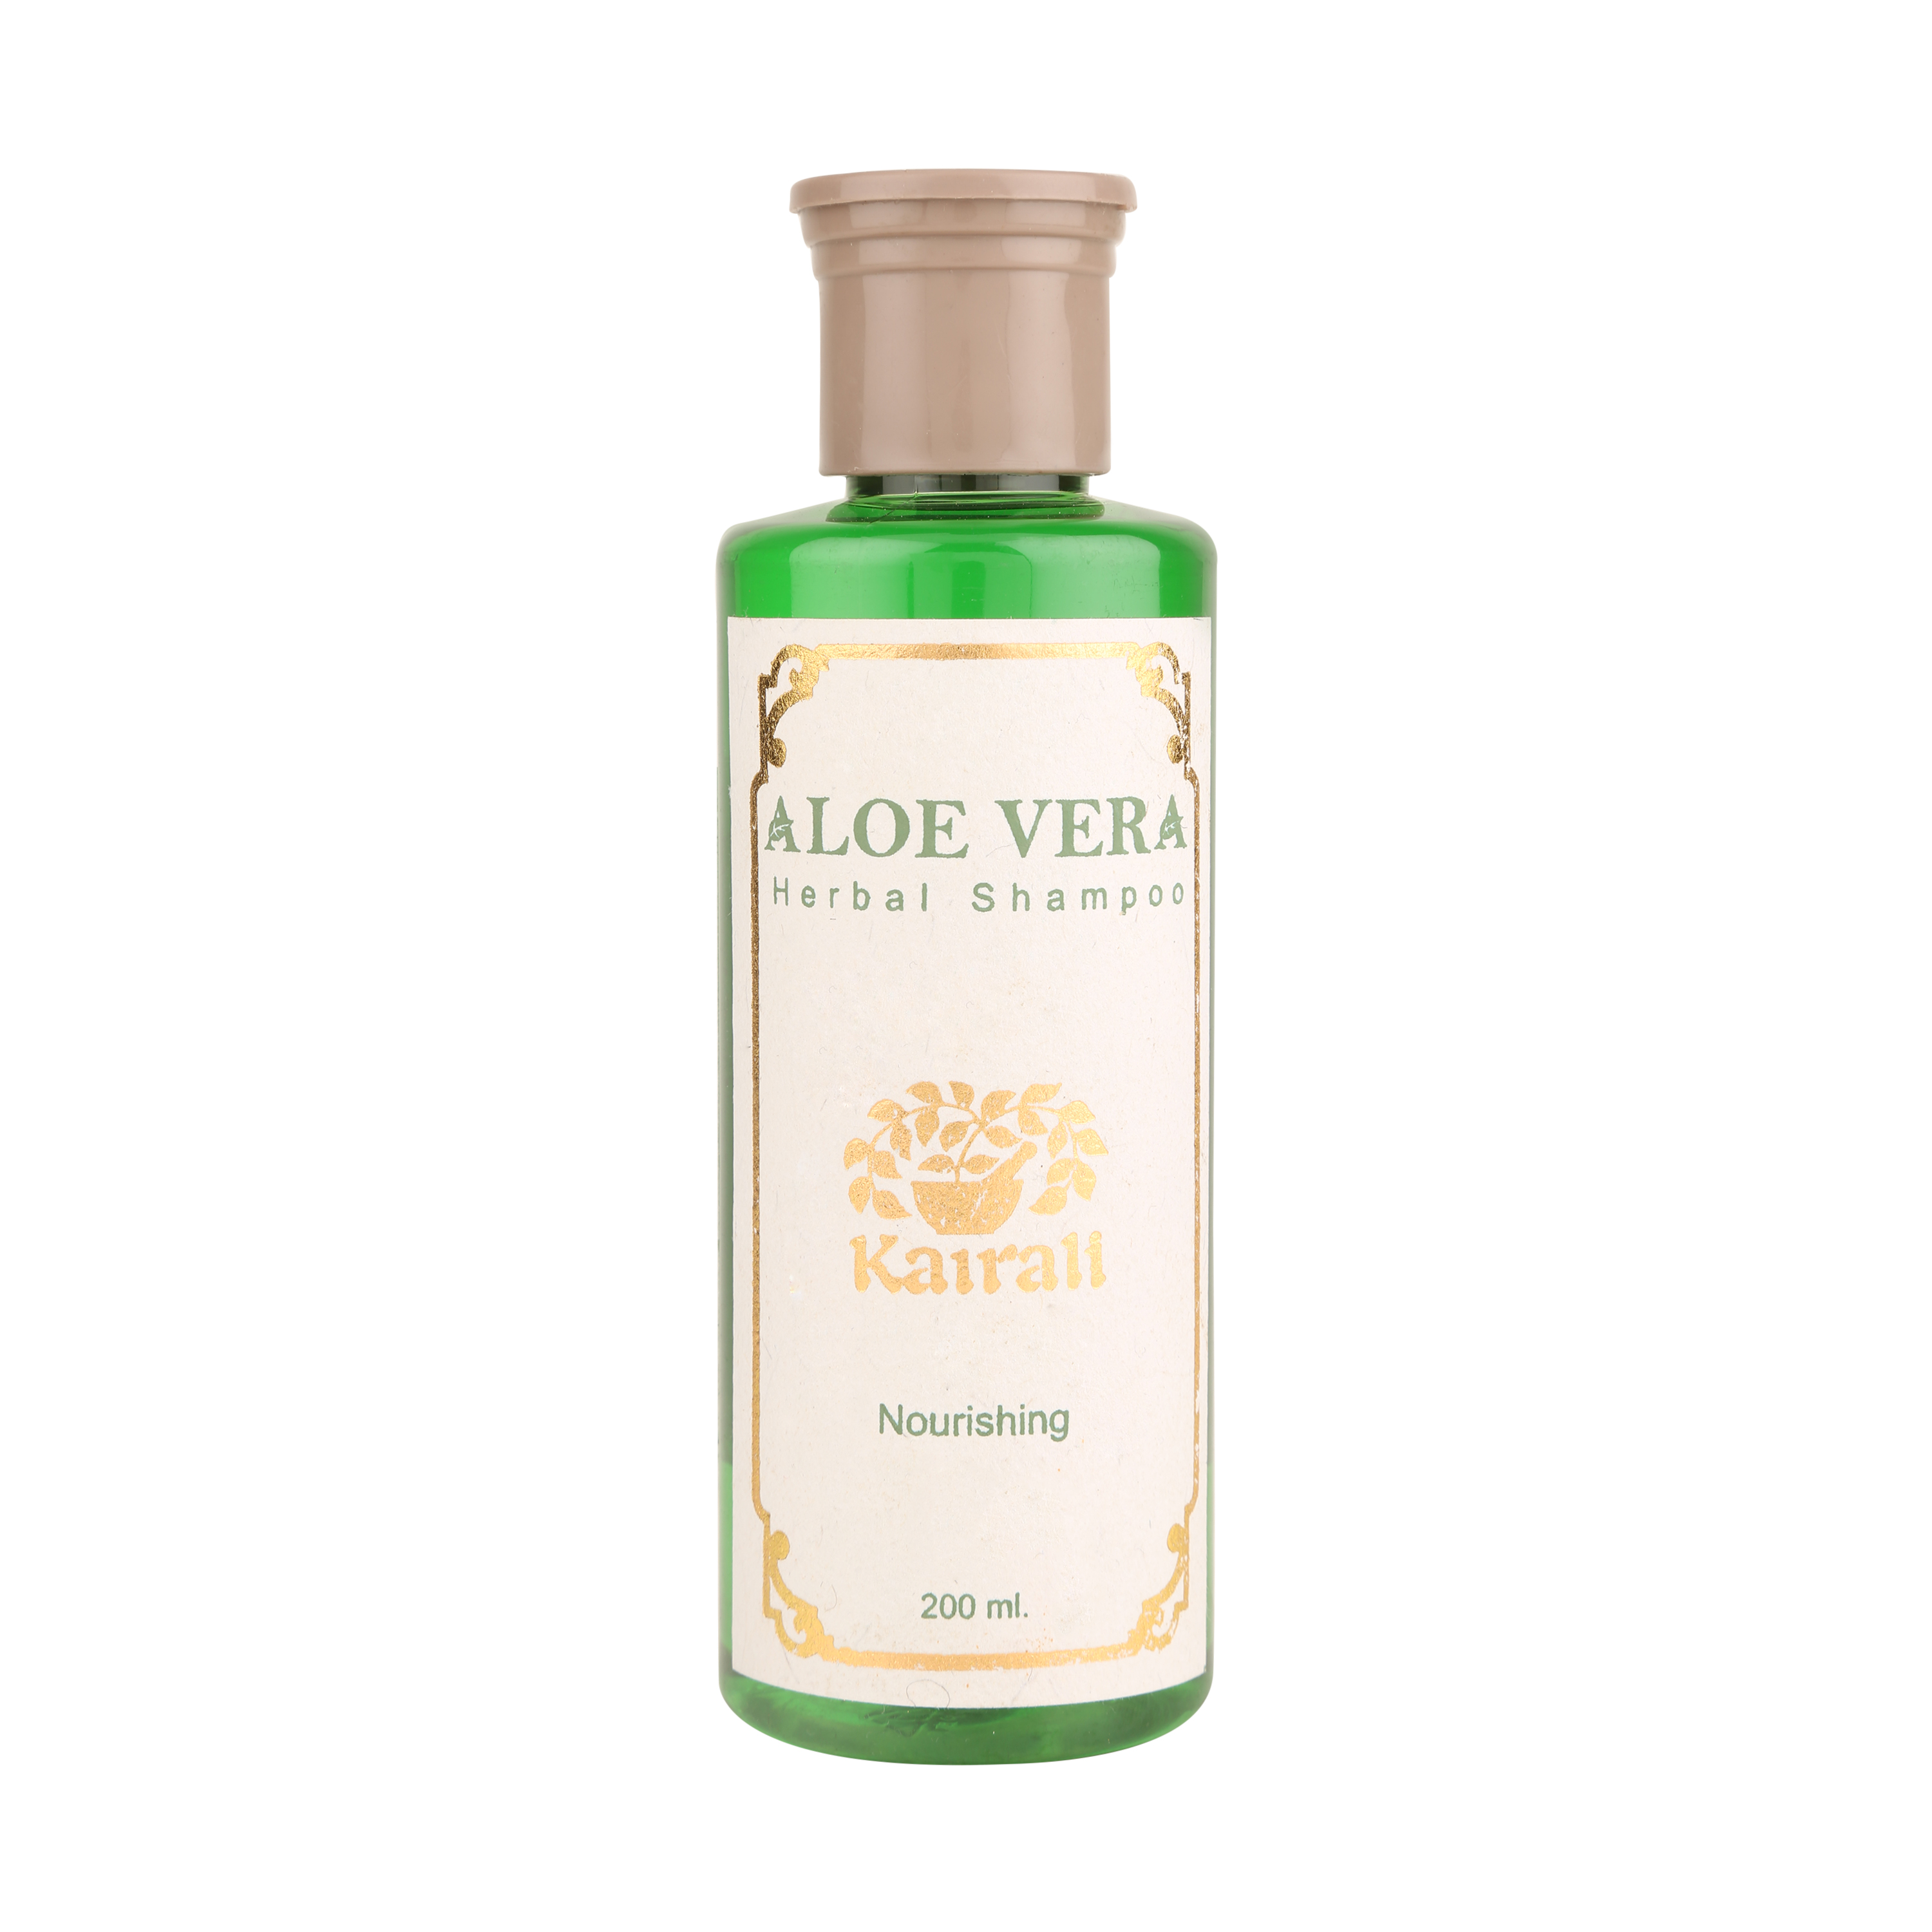 Buy Kairali Aloe Vera Herbal Shampoo at Best Price Online